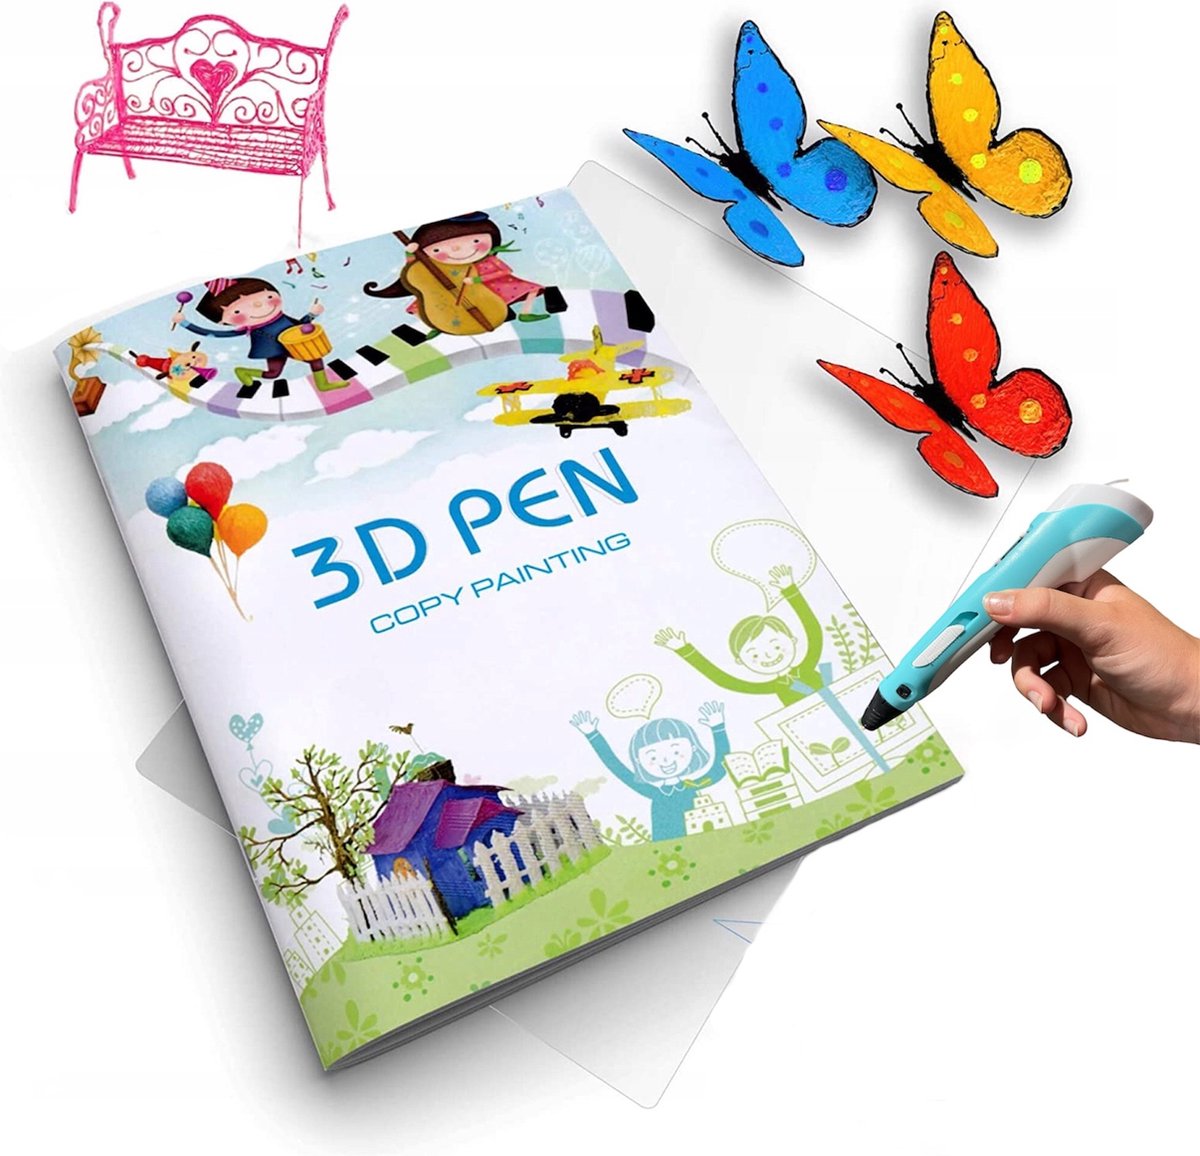 3Dandprint 3D Pen Starter Package Red - Comprend un filament de 50 mètres -  5 pochoirs